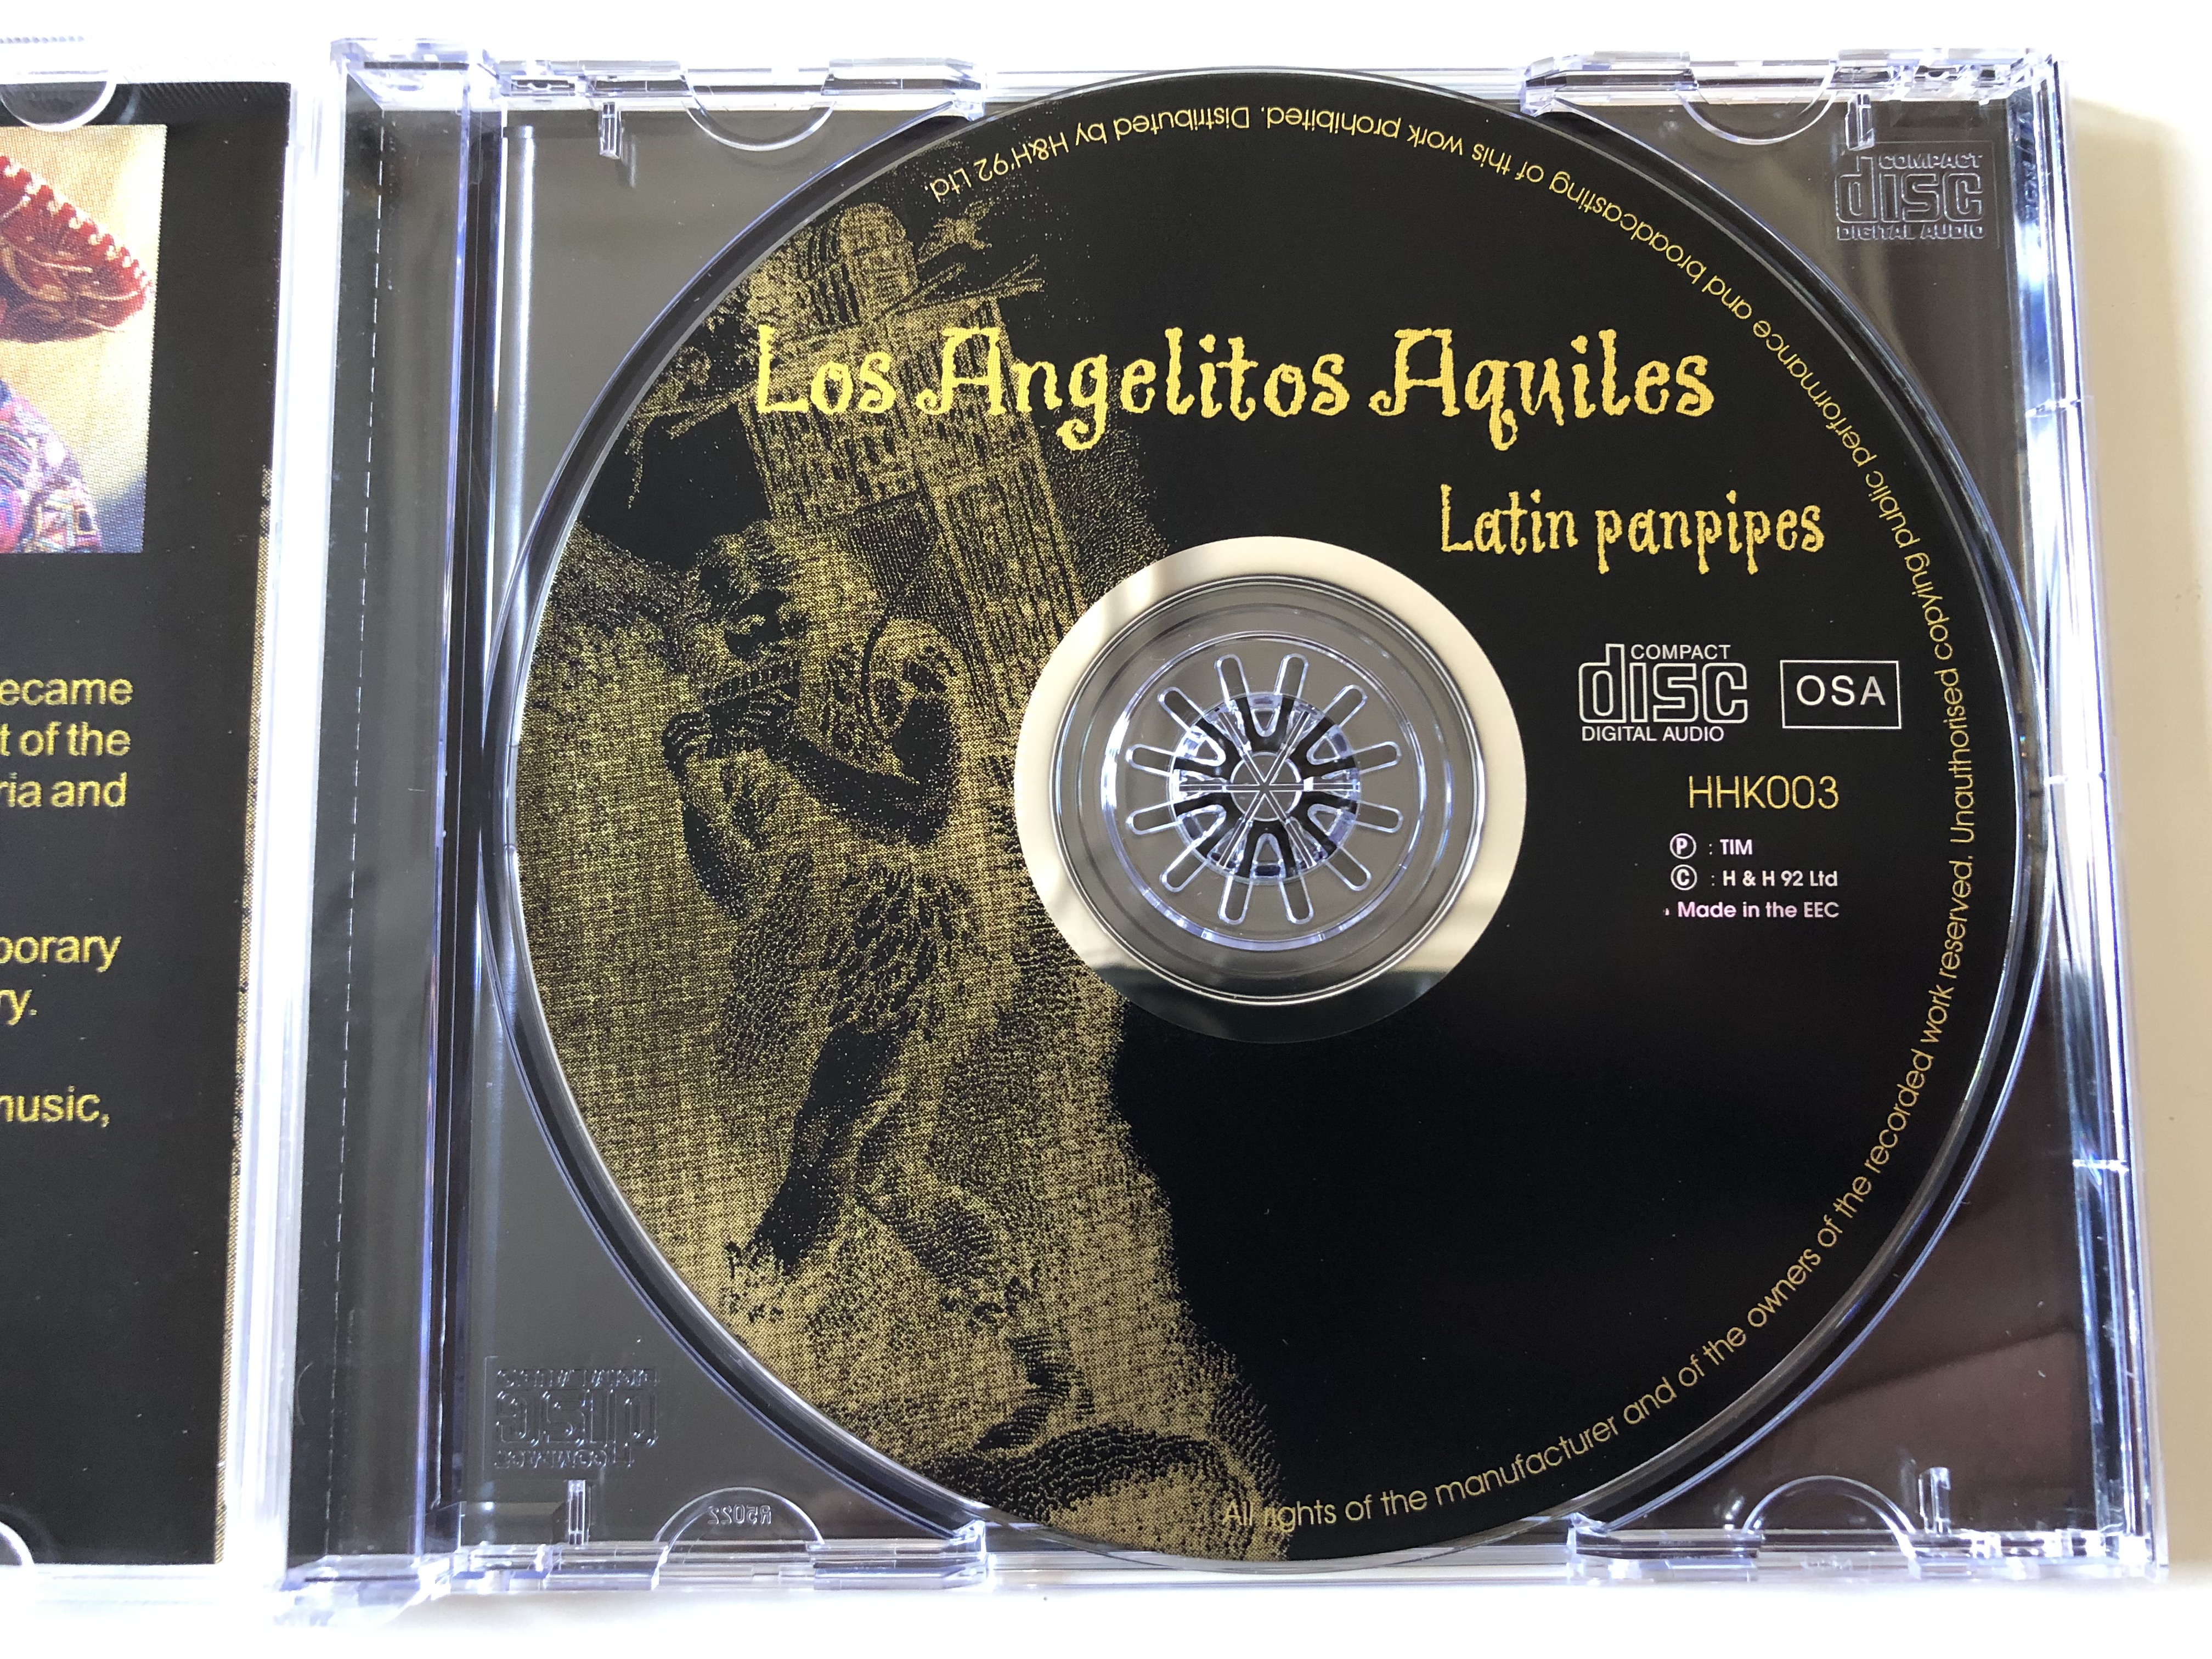 los-angelitos-aquiles-latin-panpipes-h-h-92-ltd.-audio-cd-2000-hhk003-3-.jpg